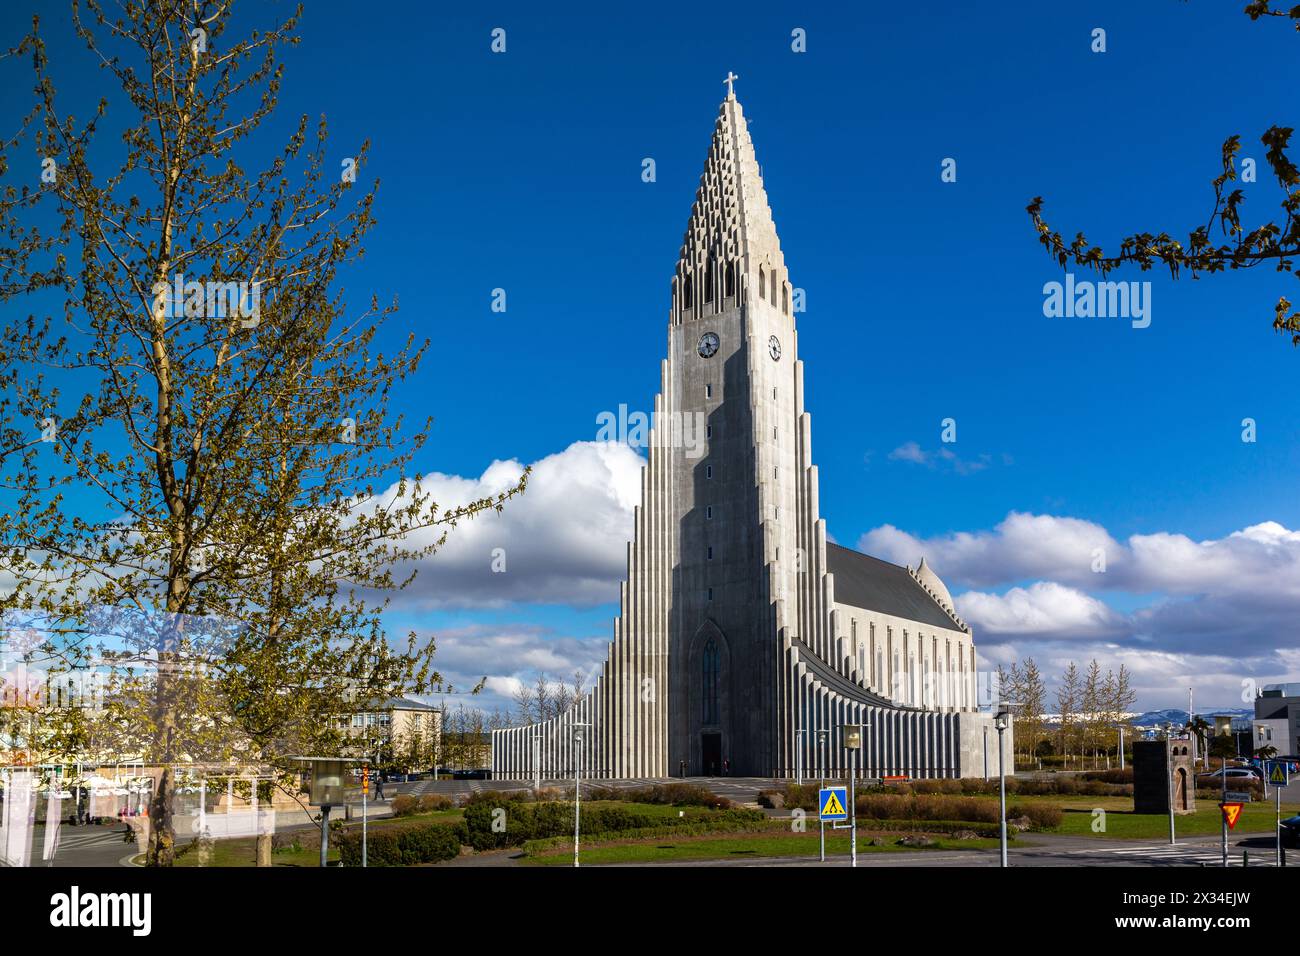 Reykjavik, Iceland, 14.05.22. Hallgrimskirkja modernist church resembling basalt columns in Reykjavik, Iceland on Skolavorduholt hill with trees. Stock Photo